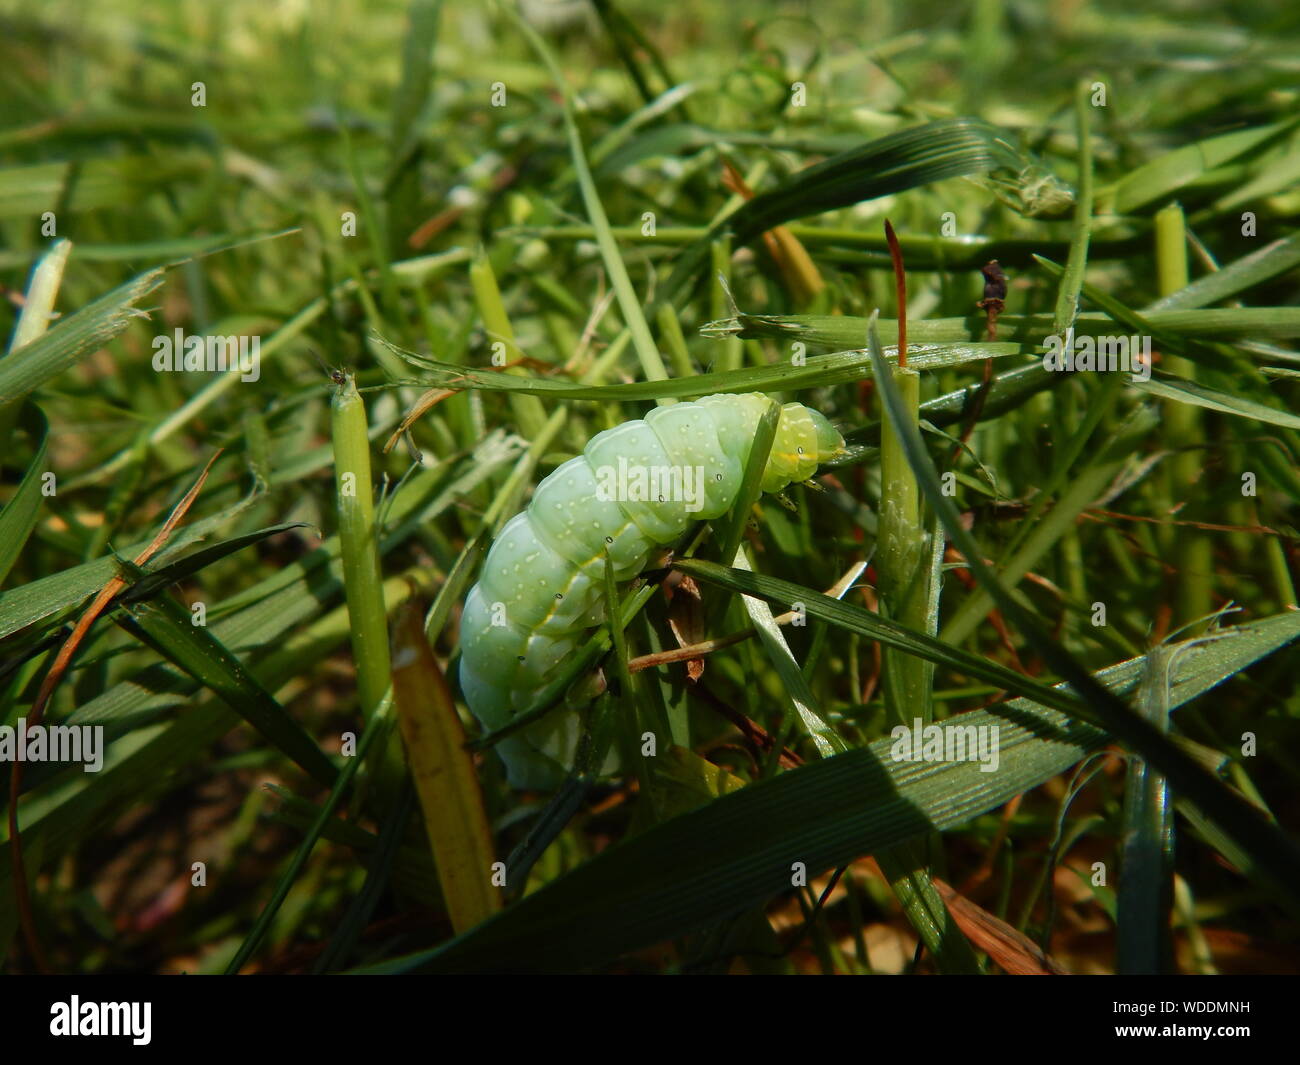 Caterpillar And Grass Hi Res Stock Photography And Images Alamy